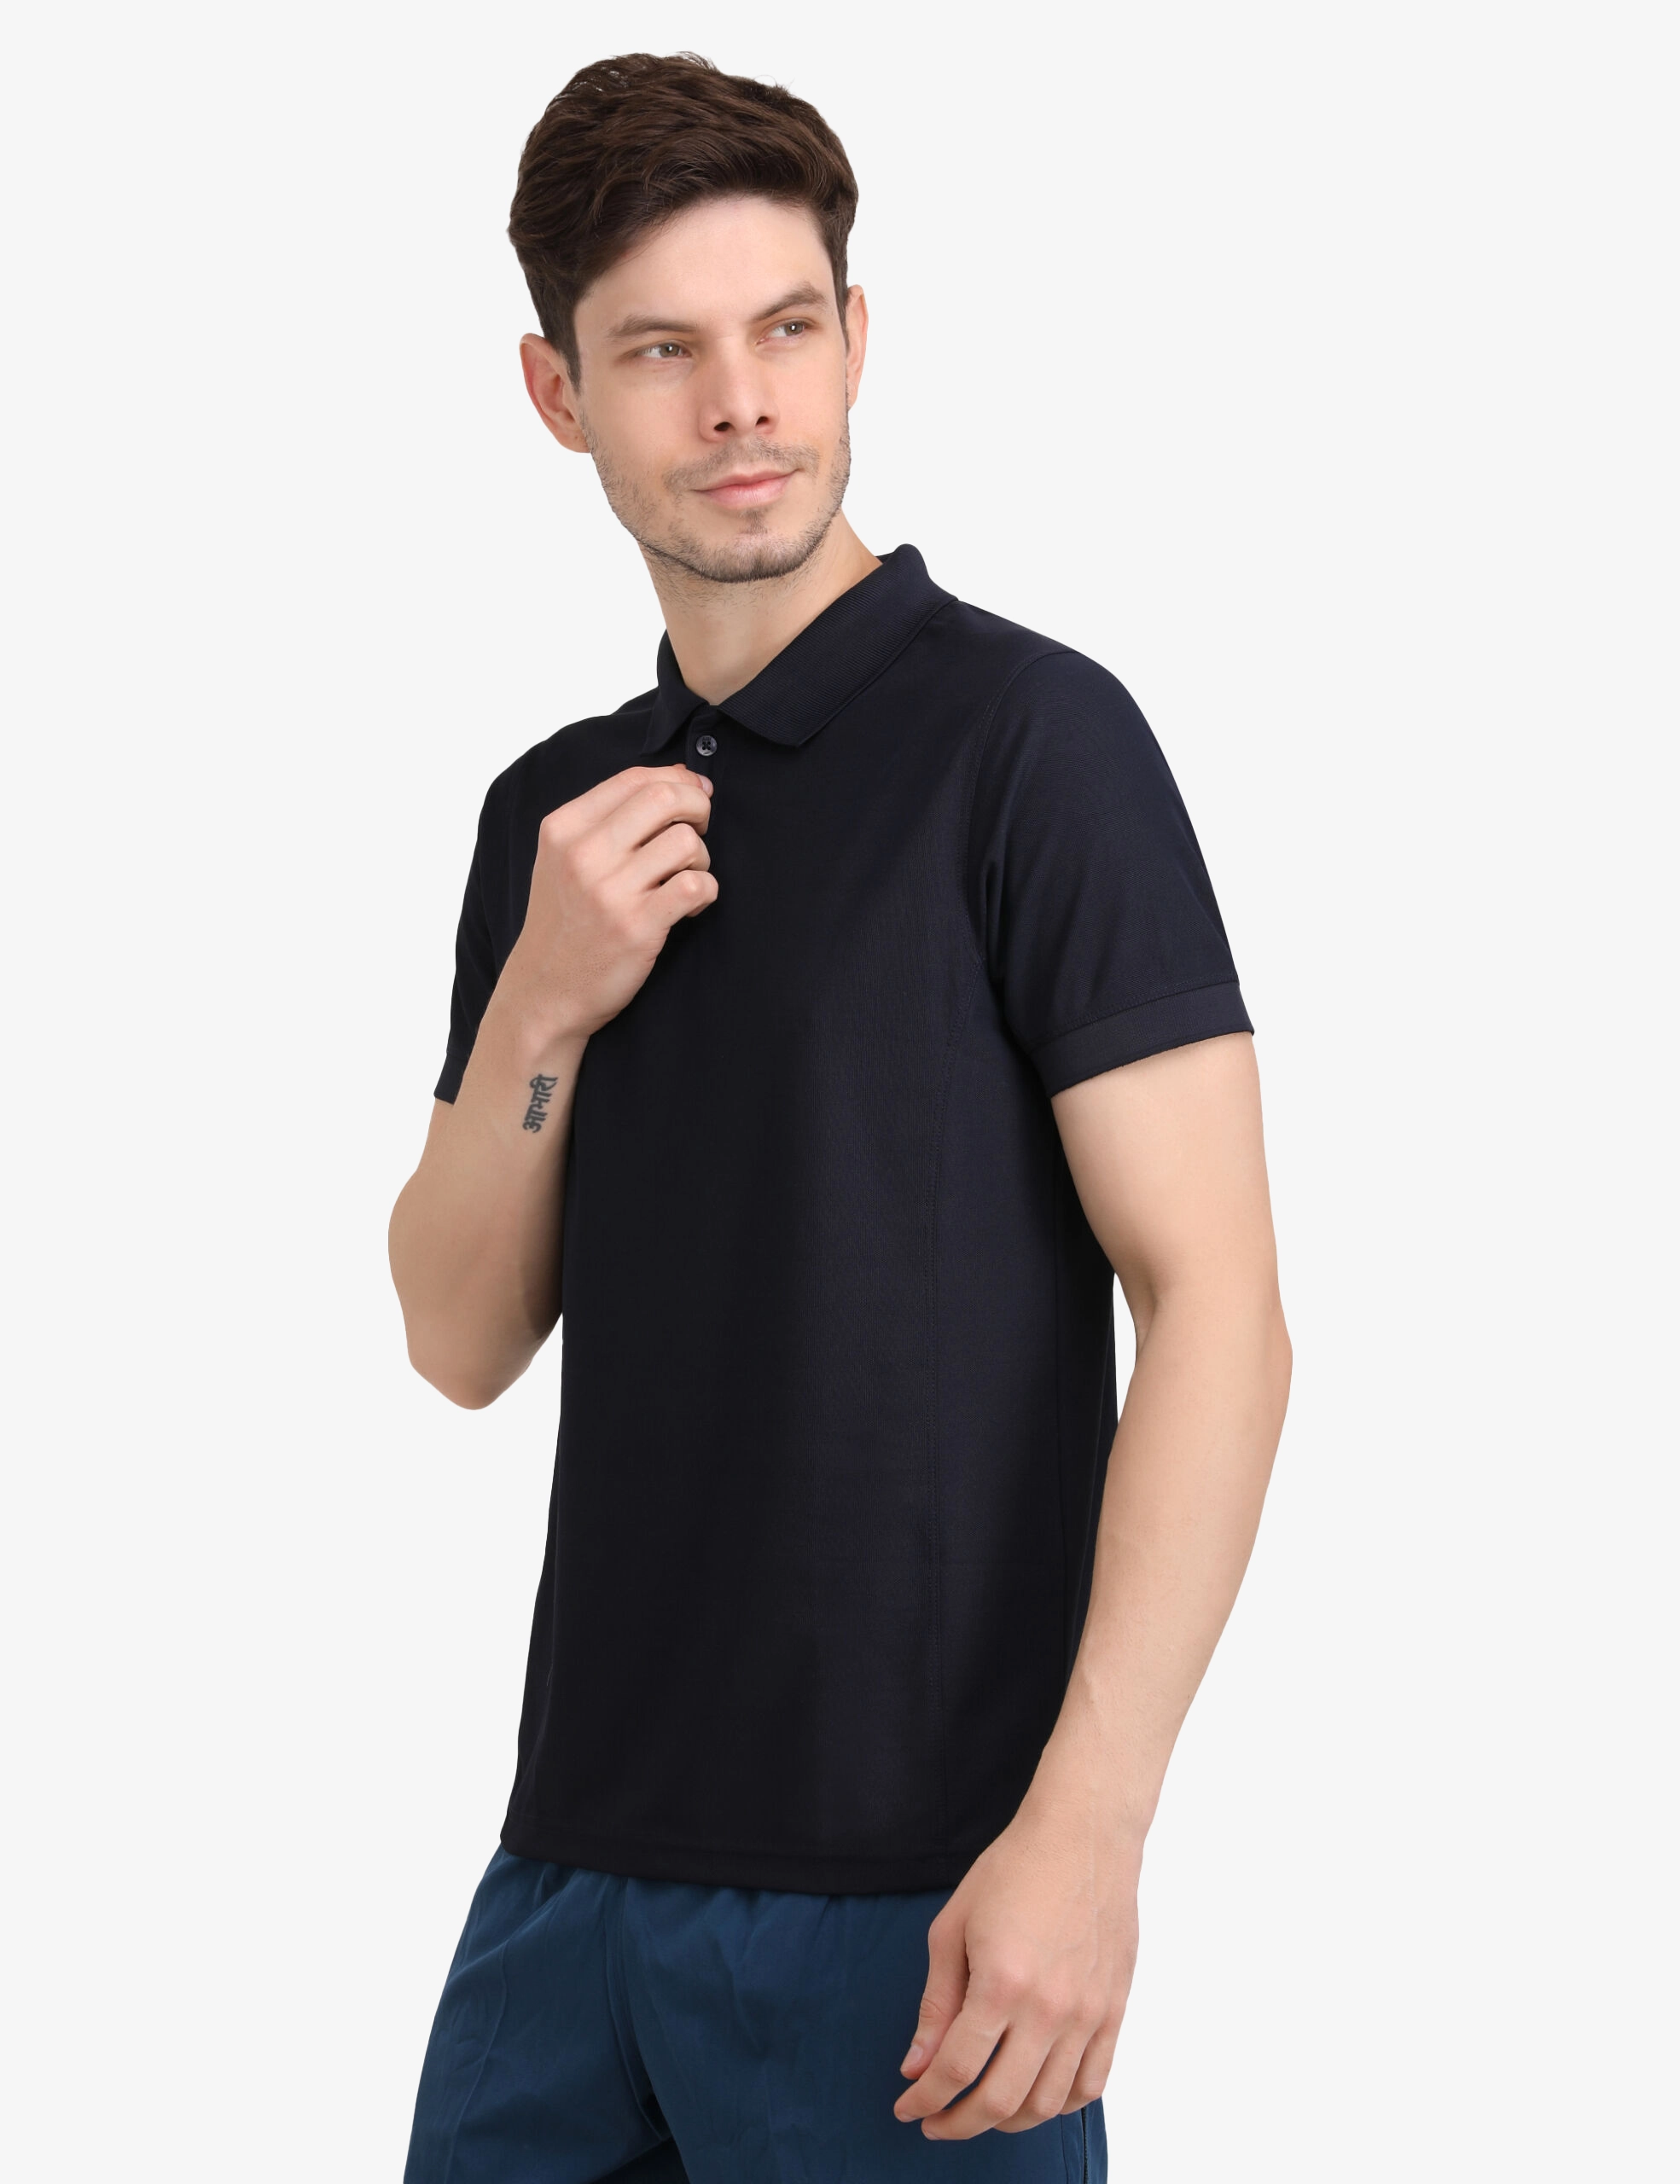 ASI Mac Sports T-Shirt Navy Blue Color for Men